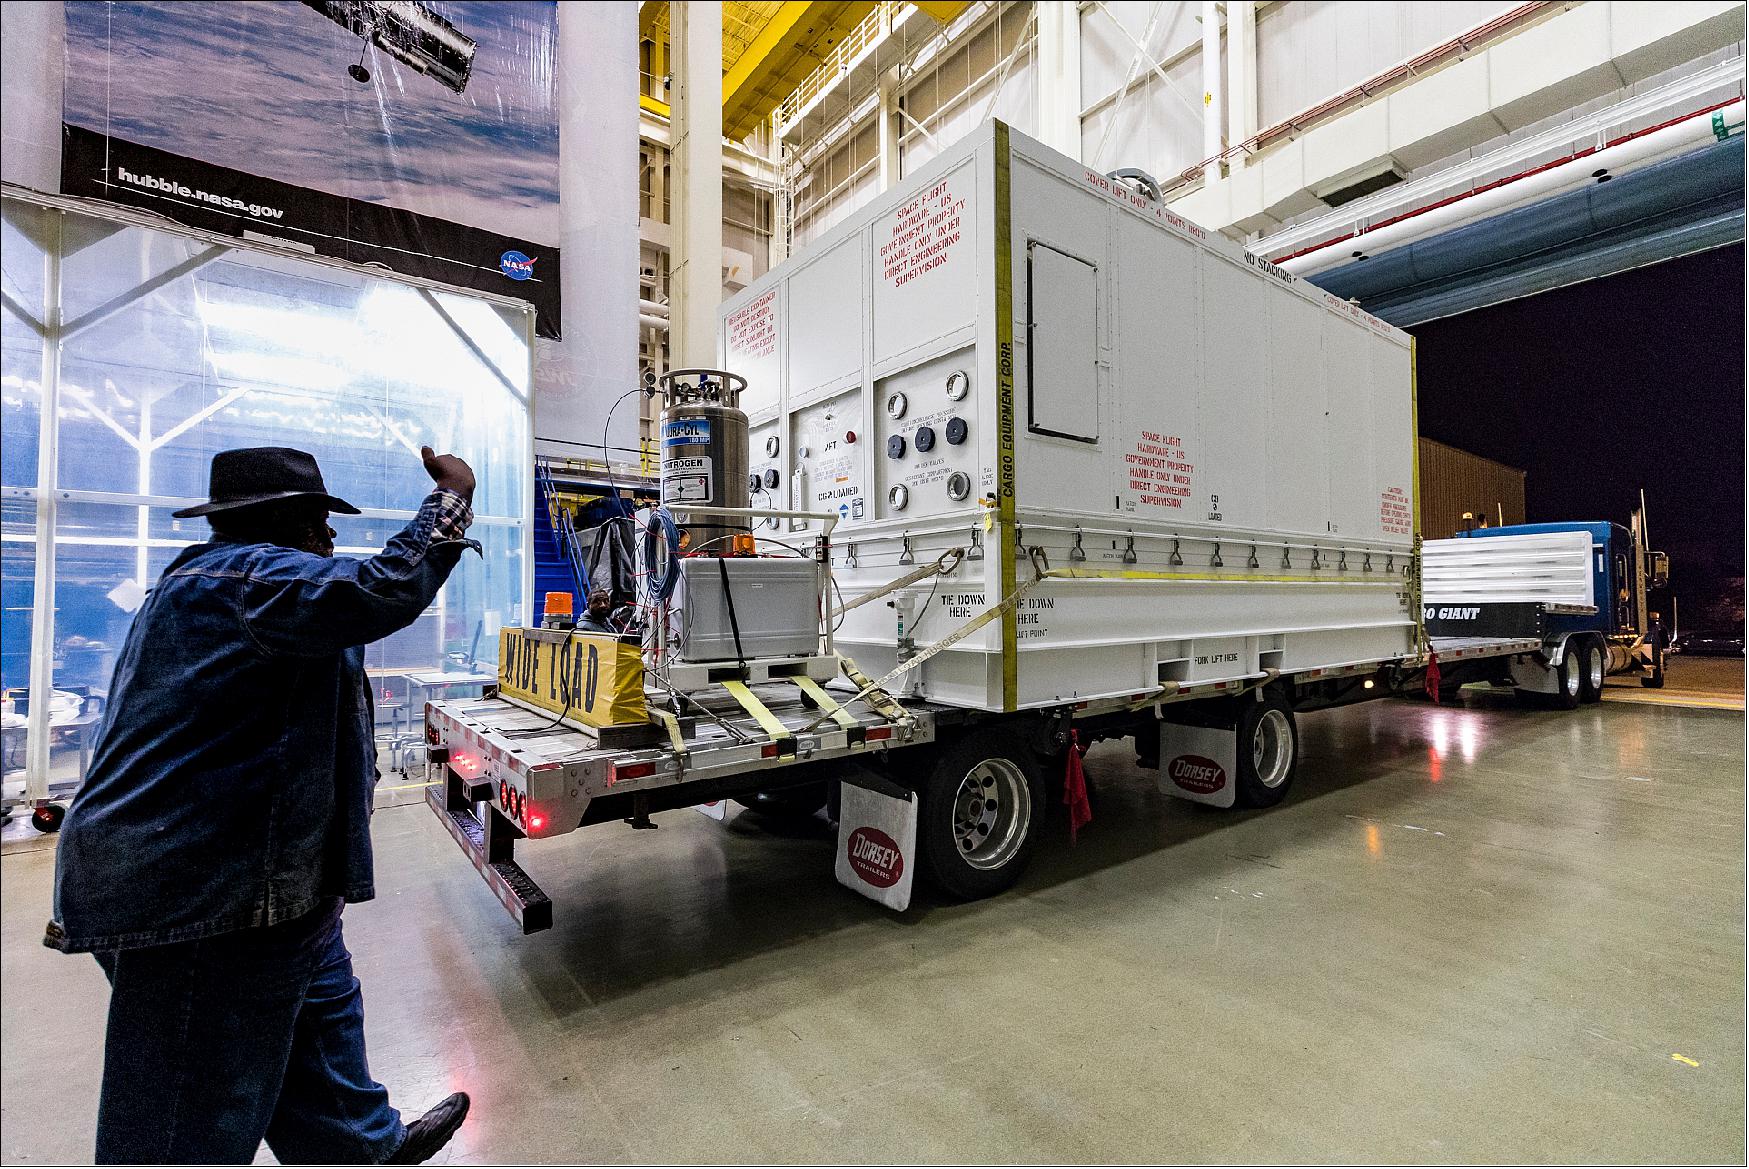 Figure 129: Parker Solar Probe arrives at the integration and testing facility at NASA/GSFC in Greenbelt, Maryland (image credit: NASA/JHU/APL, Ed Whitman)